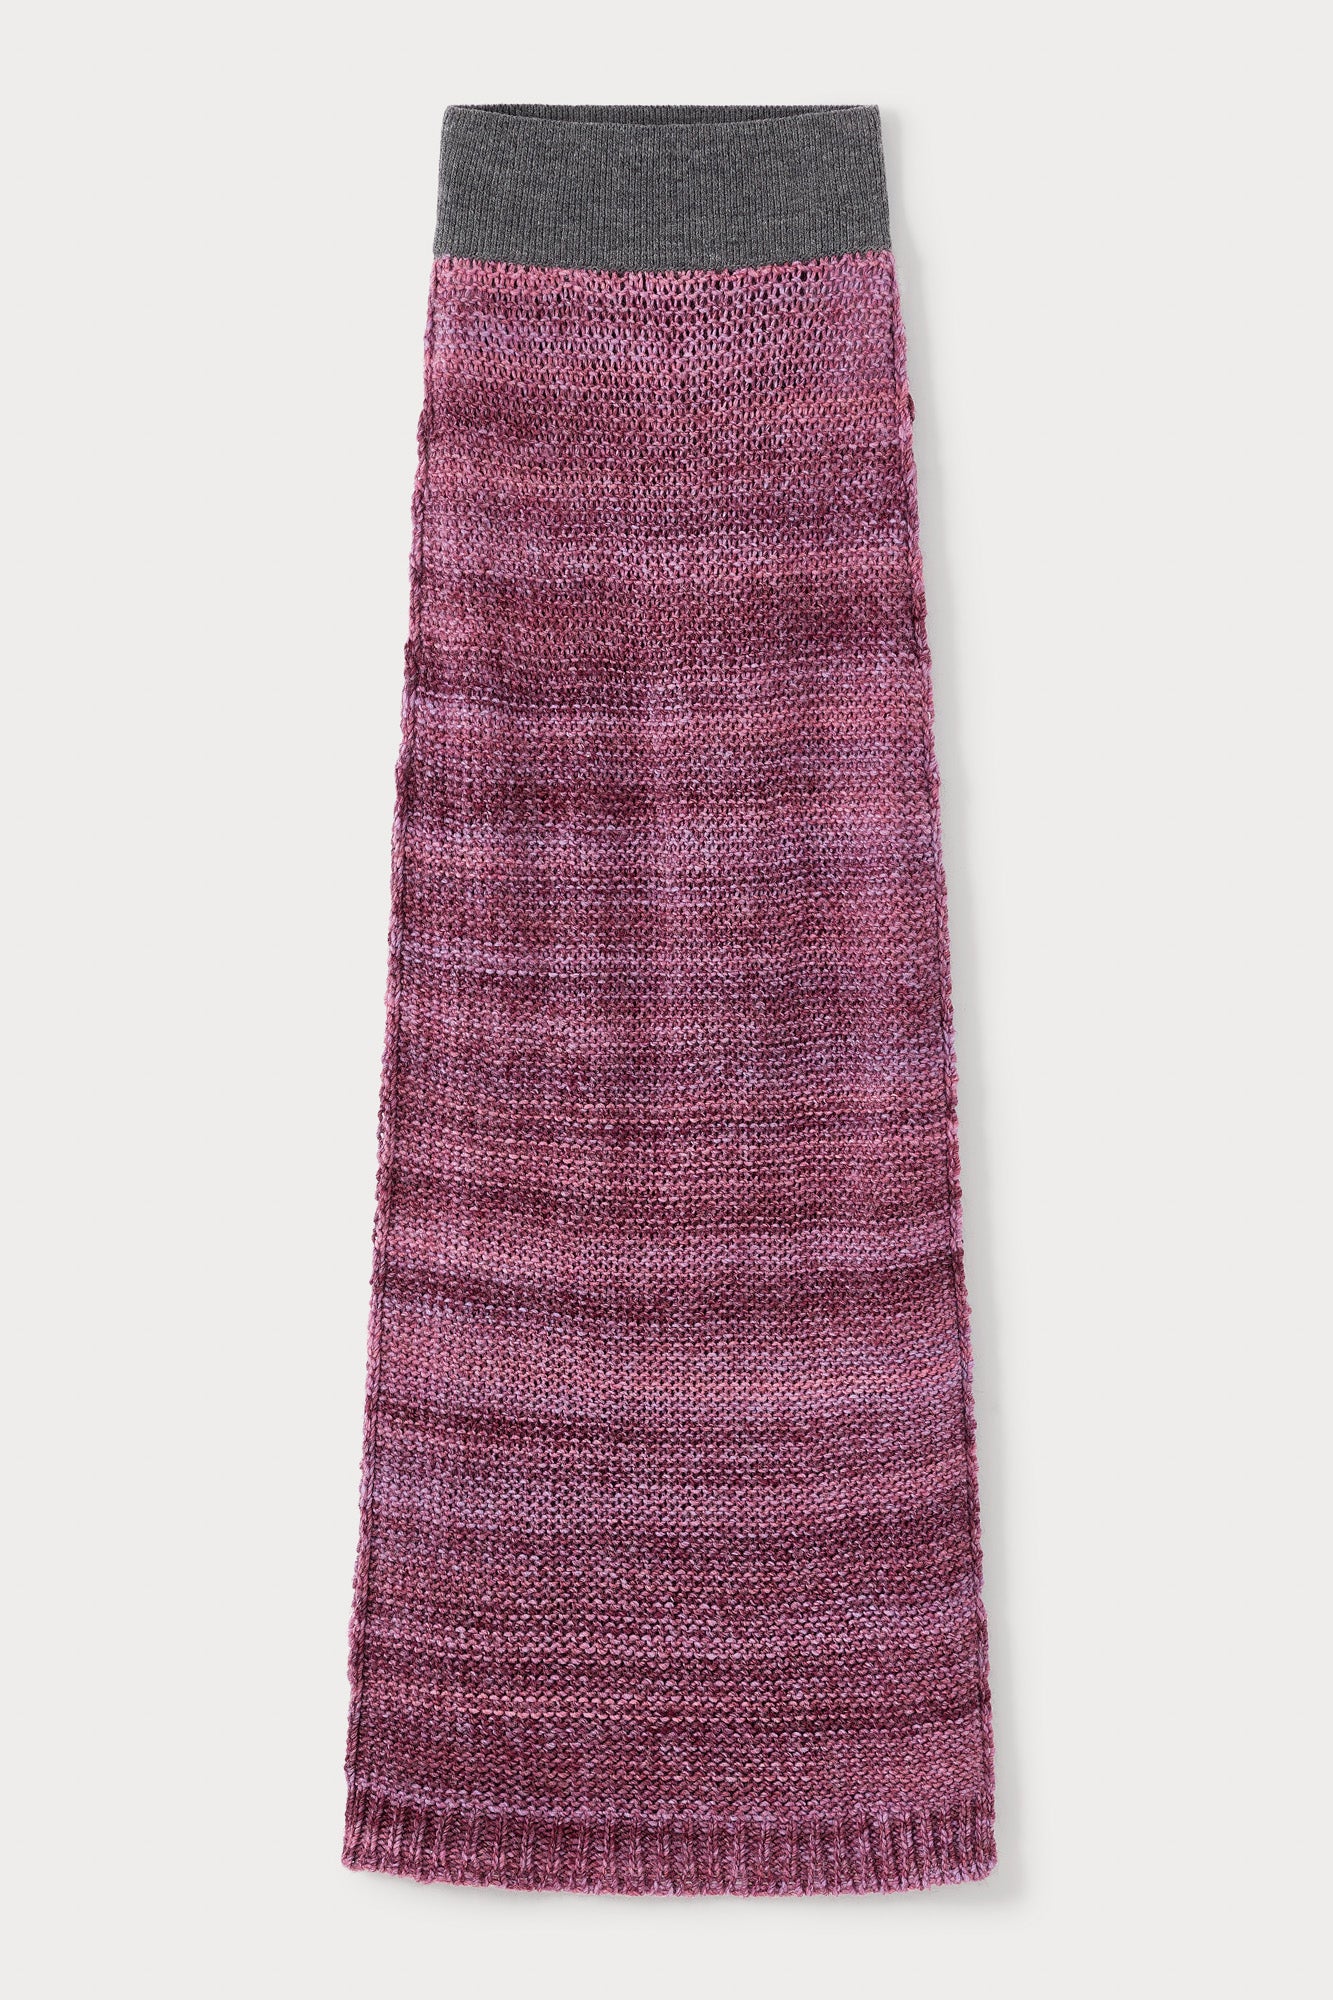 Wool purple skirt